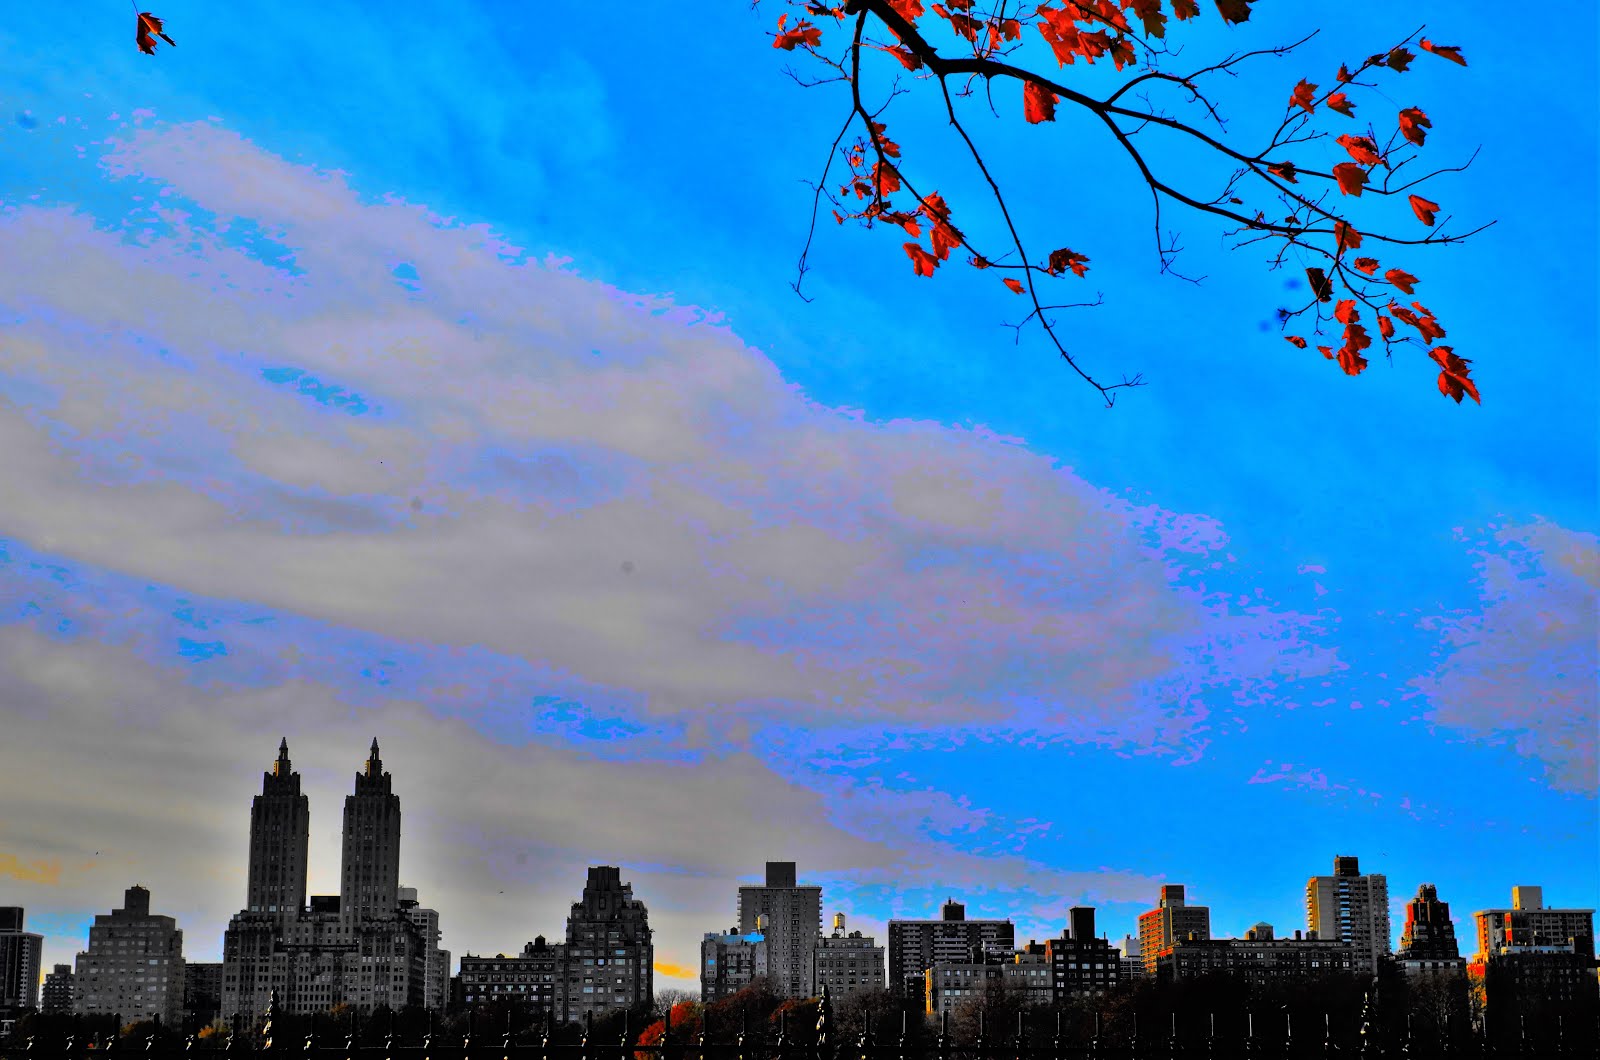 New York Central Park Skyline - The Art of Late Fall 2015